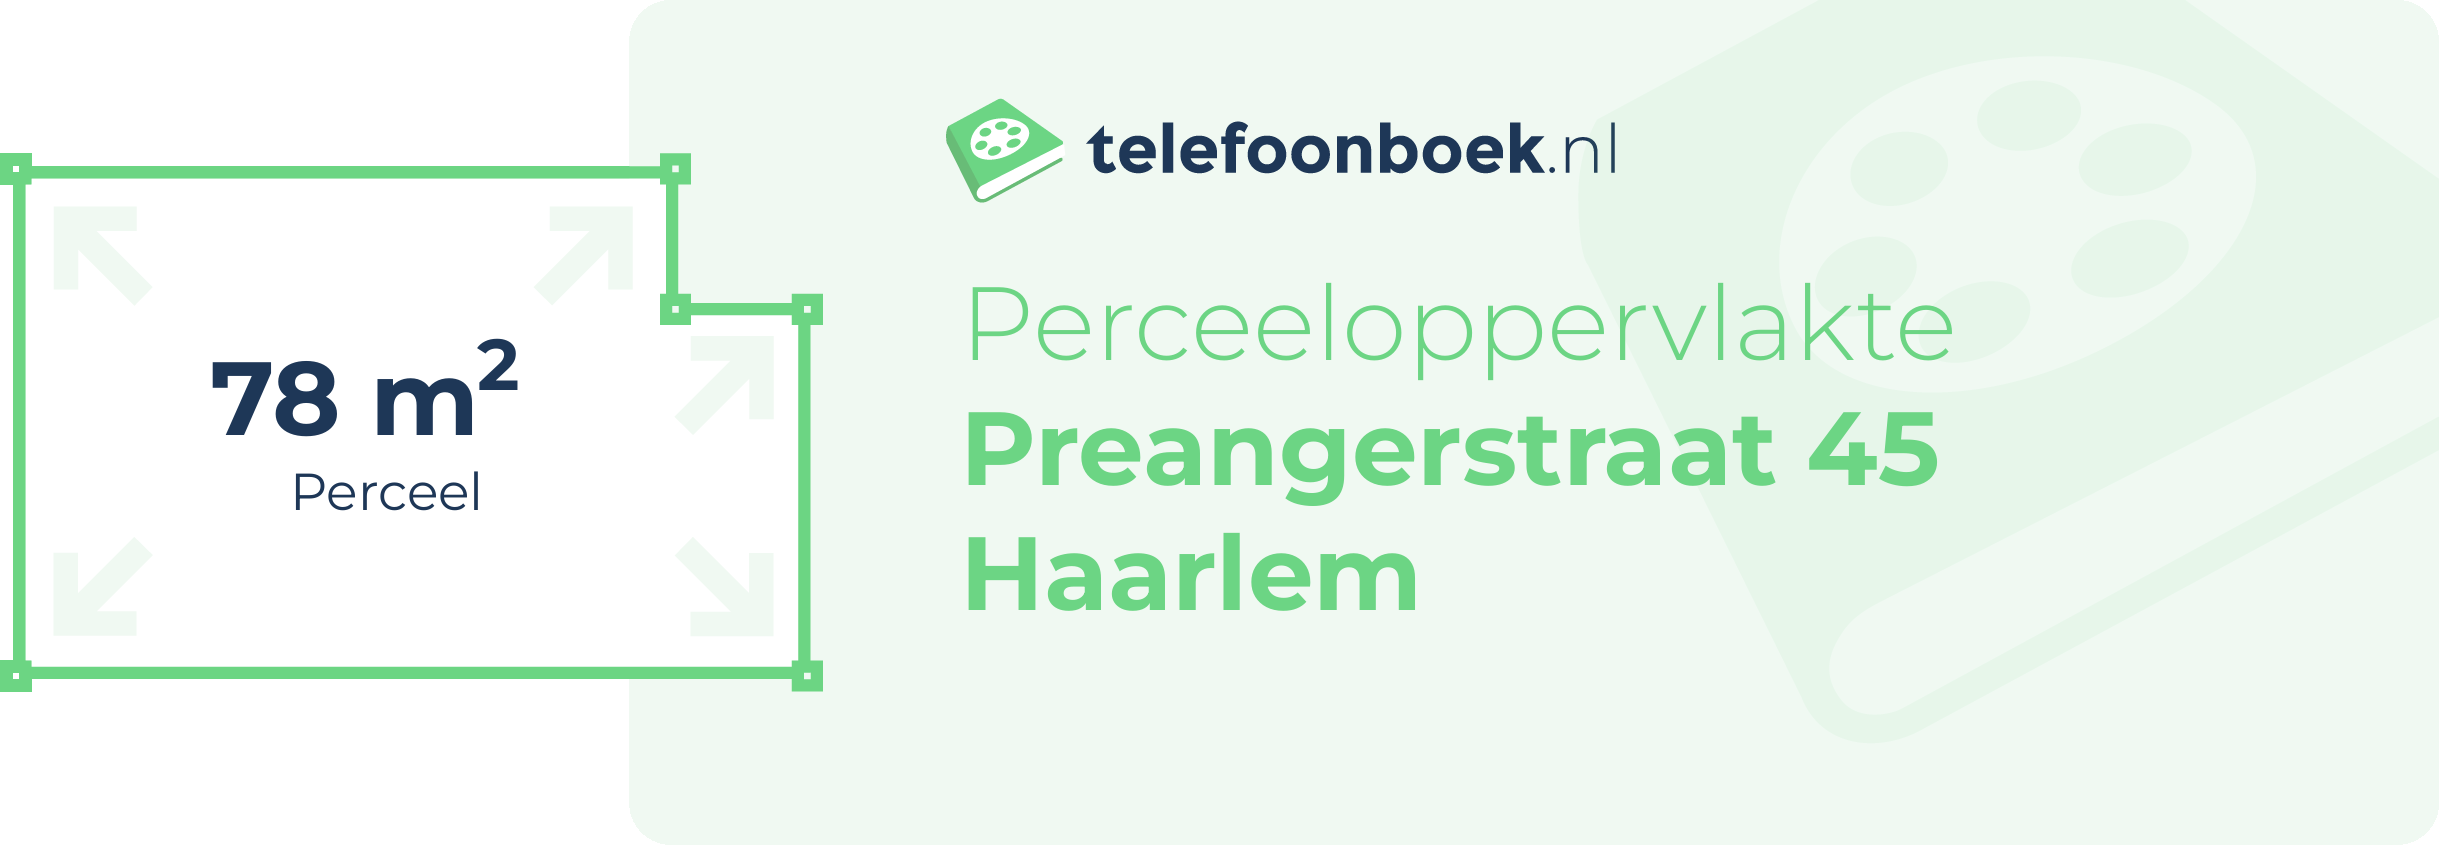 Perceeloppervlakte Preangerstraat 45 Haarlem